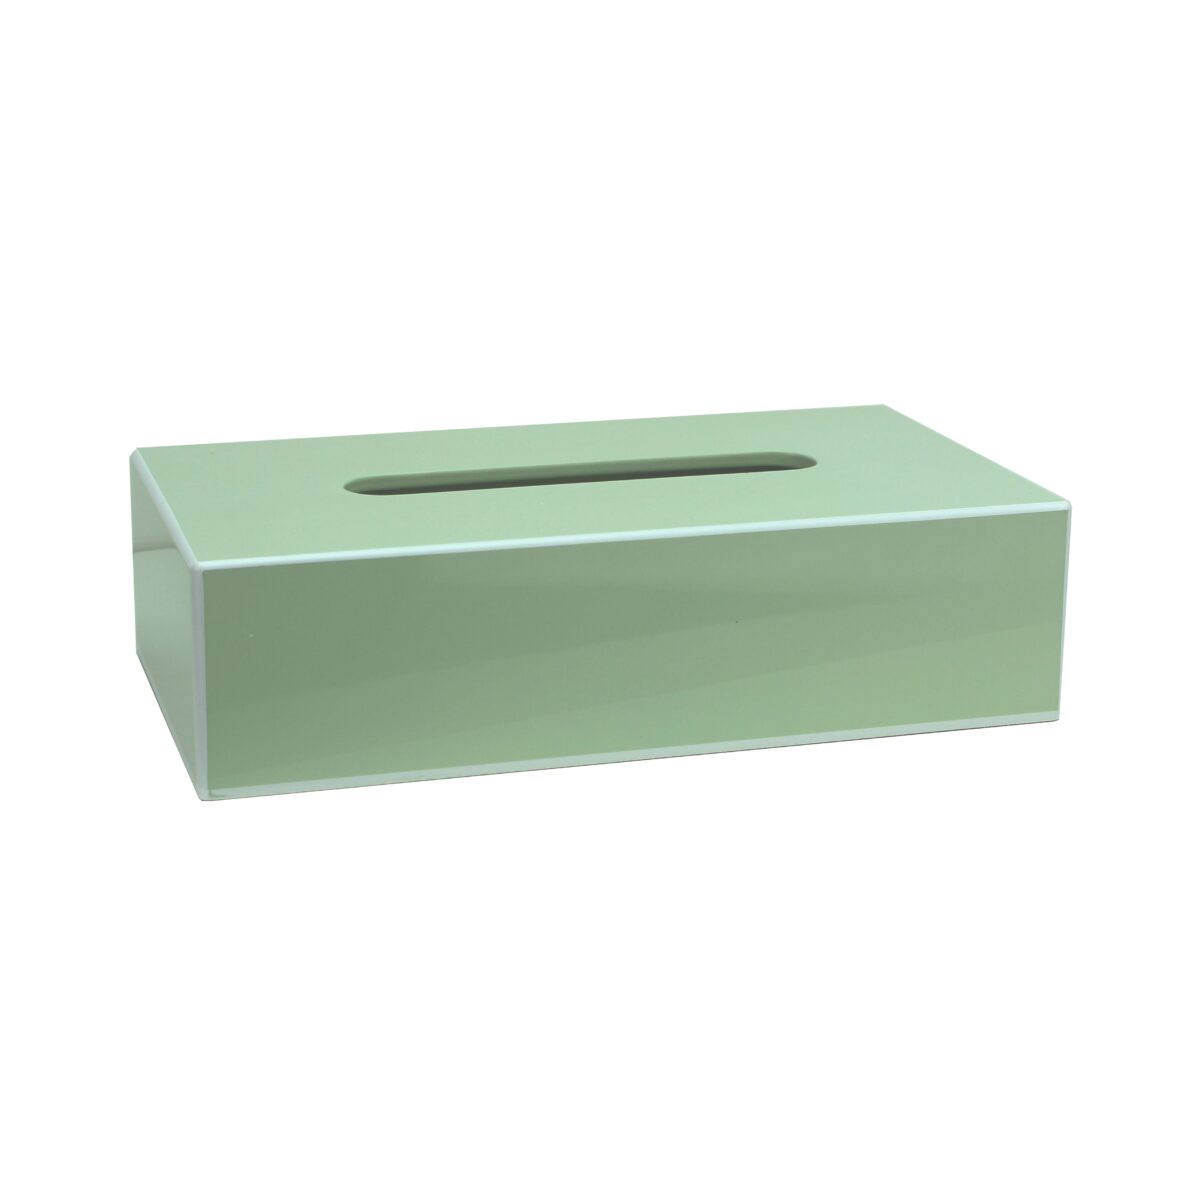 Ideal caja rectangular para Kleenex , de madera lacada en color